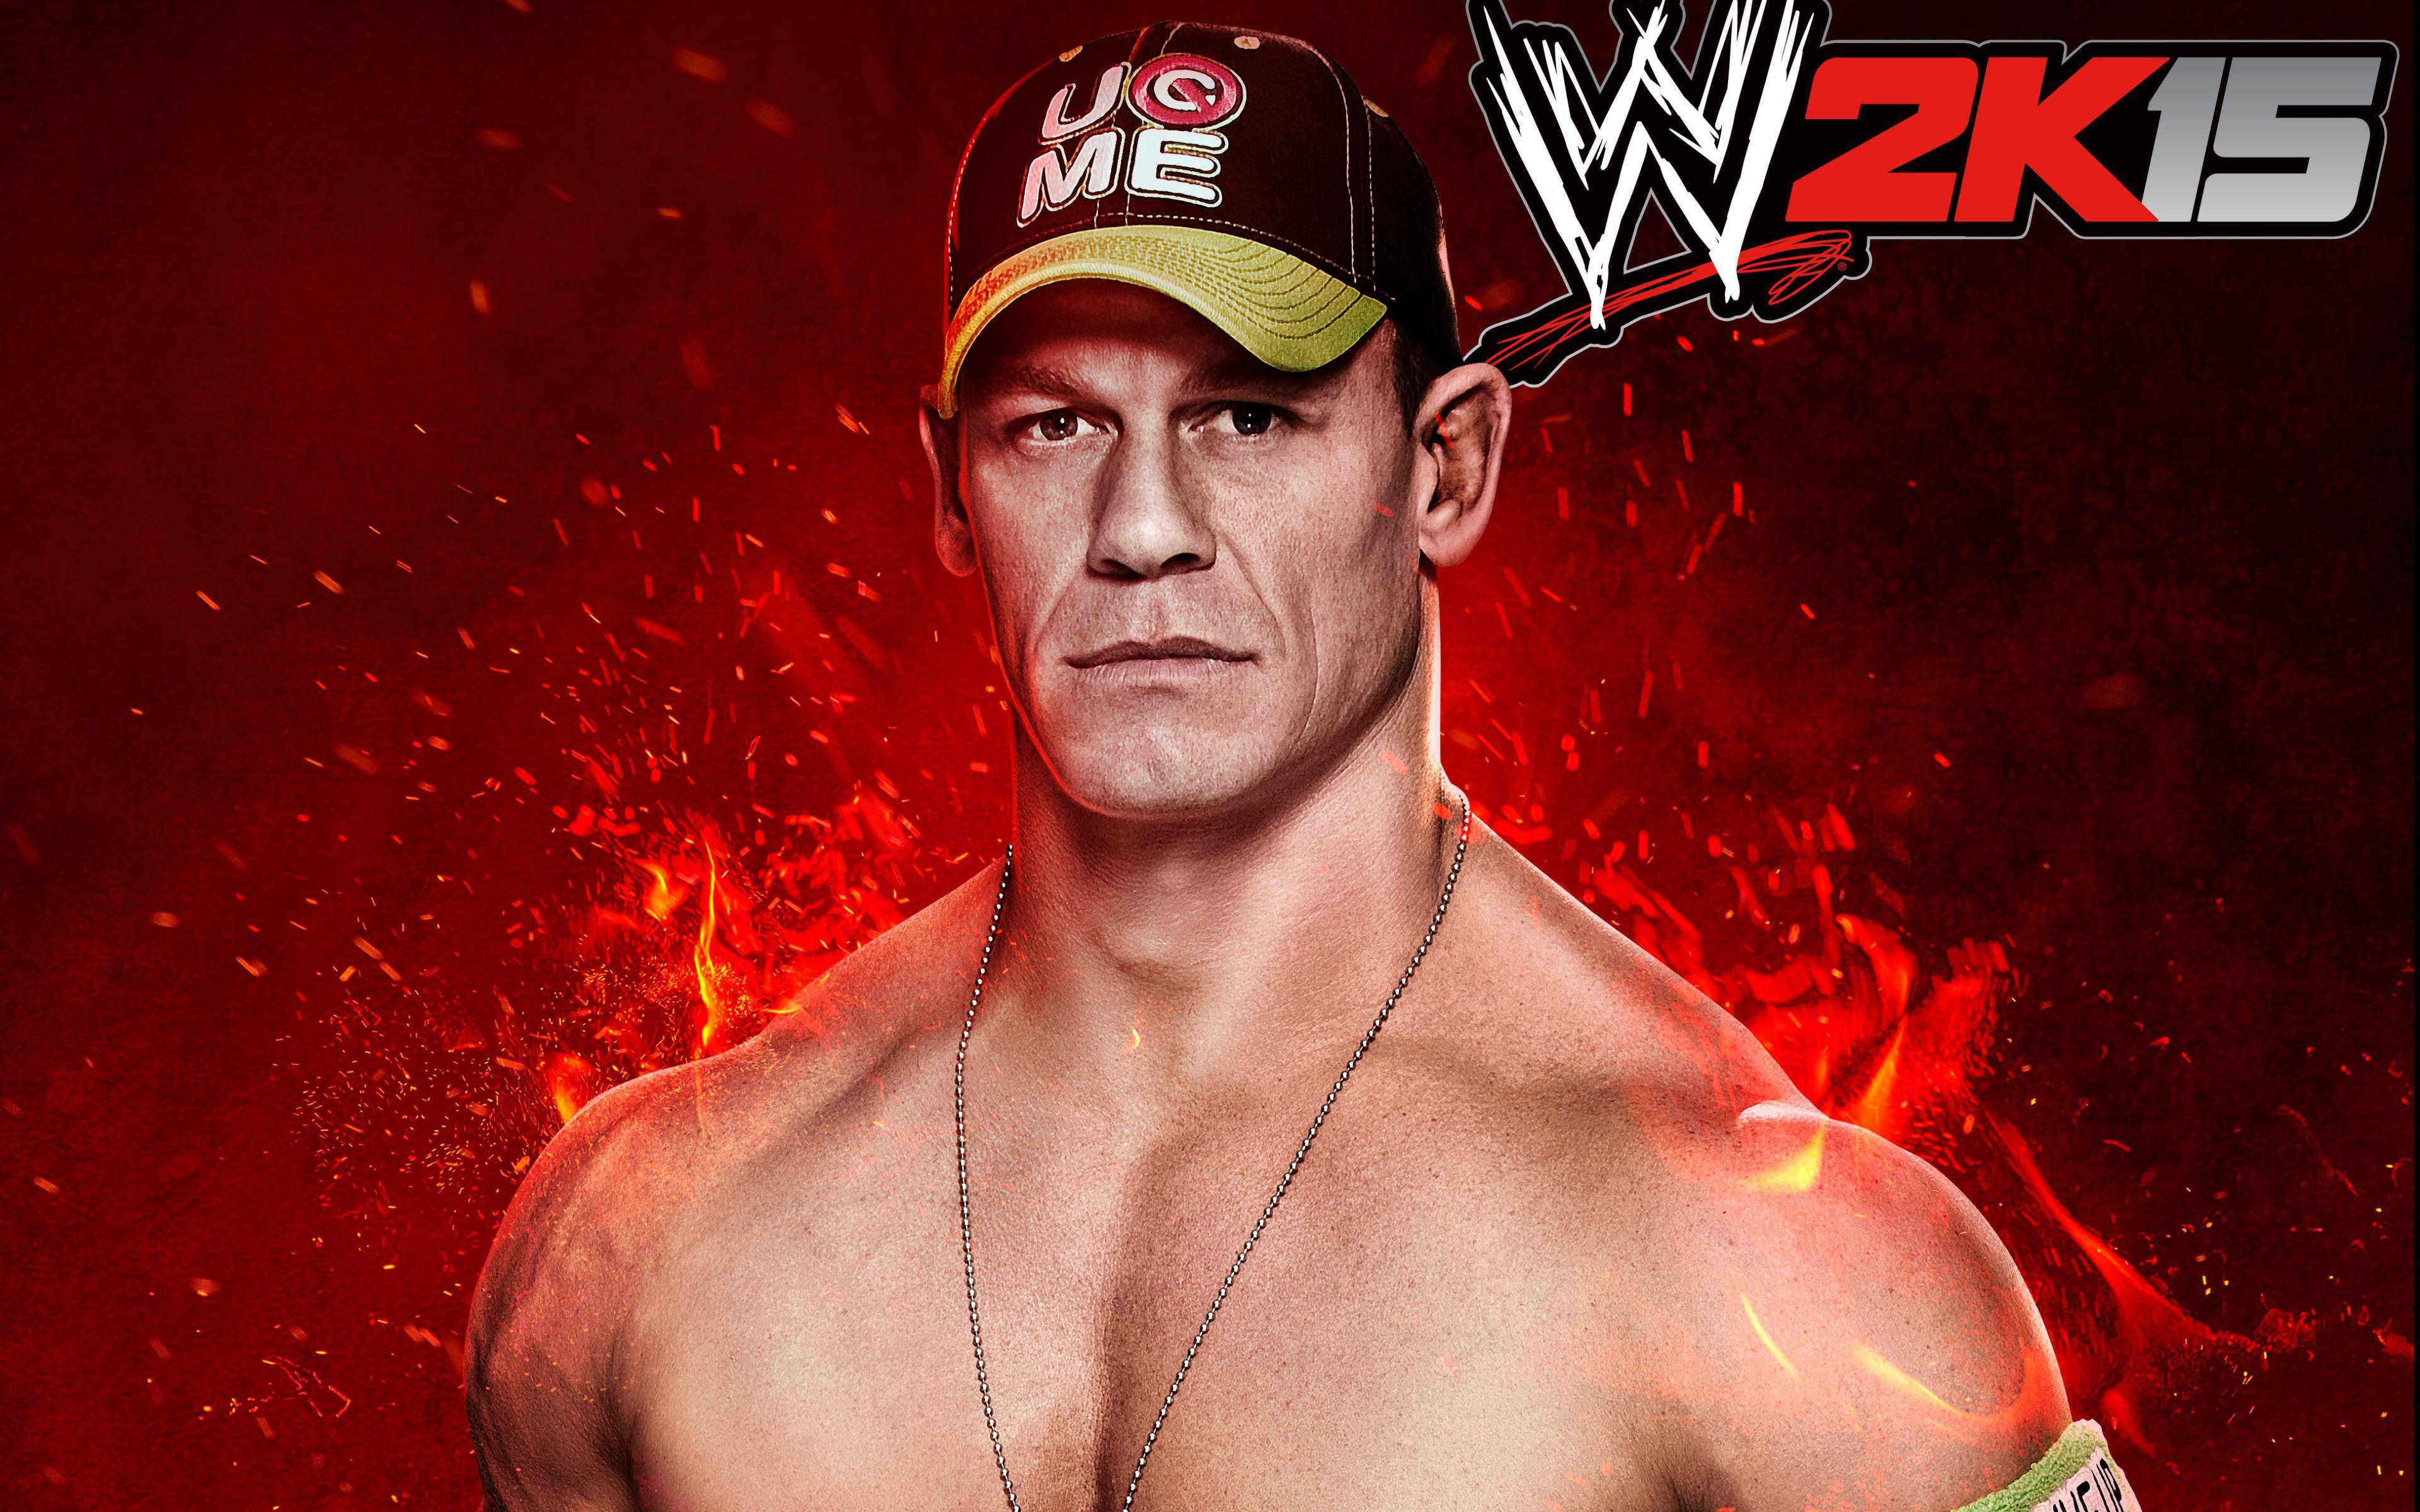 WWE Superstar John Cena Latest HD Wallpaper And New Photo. HD